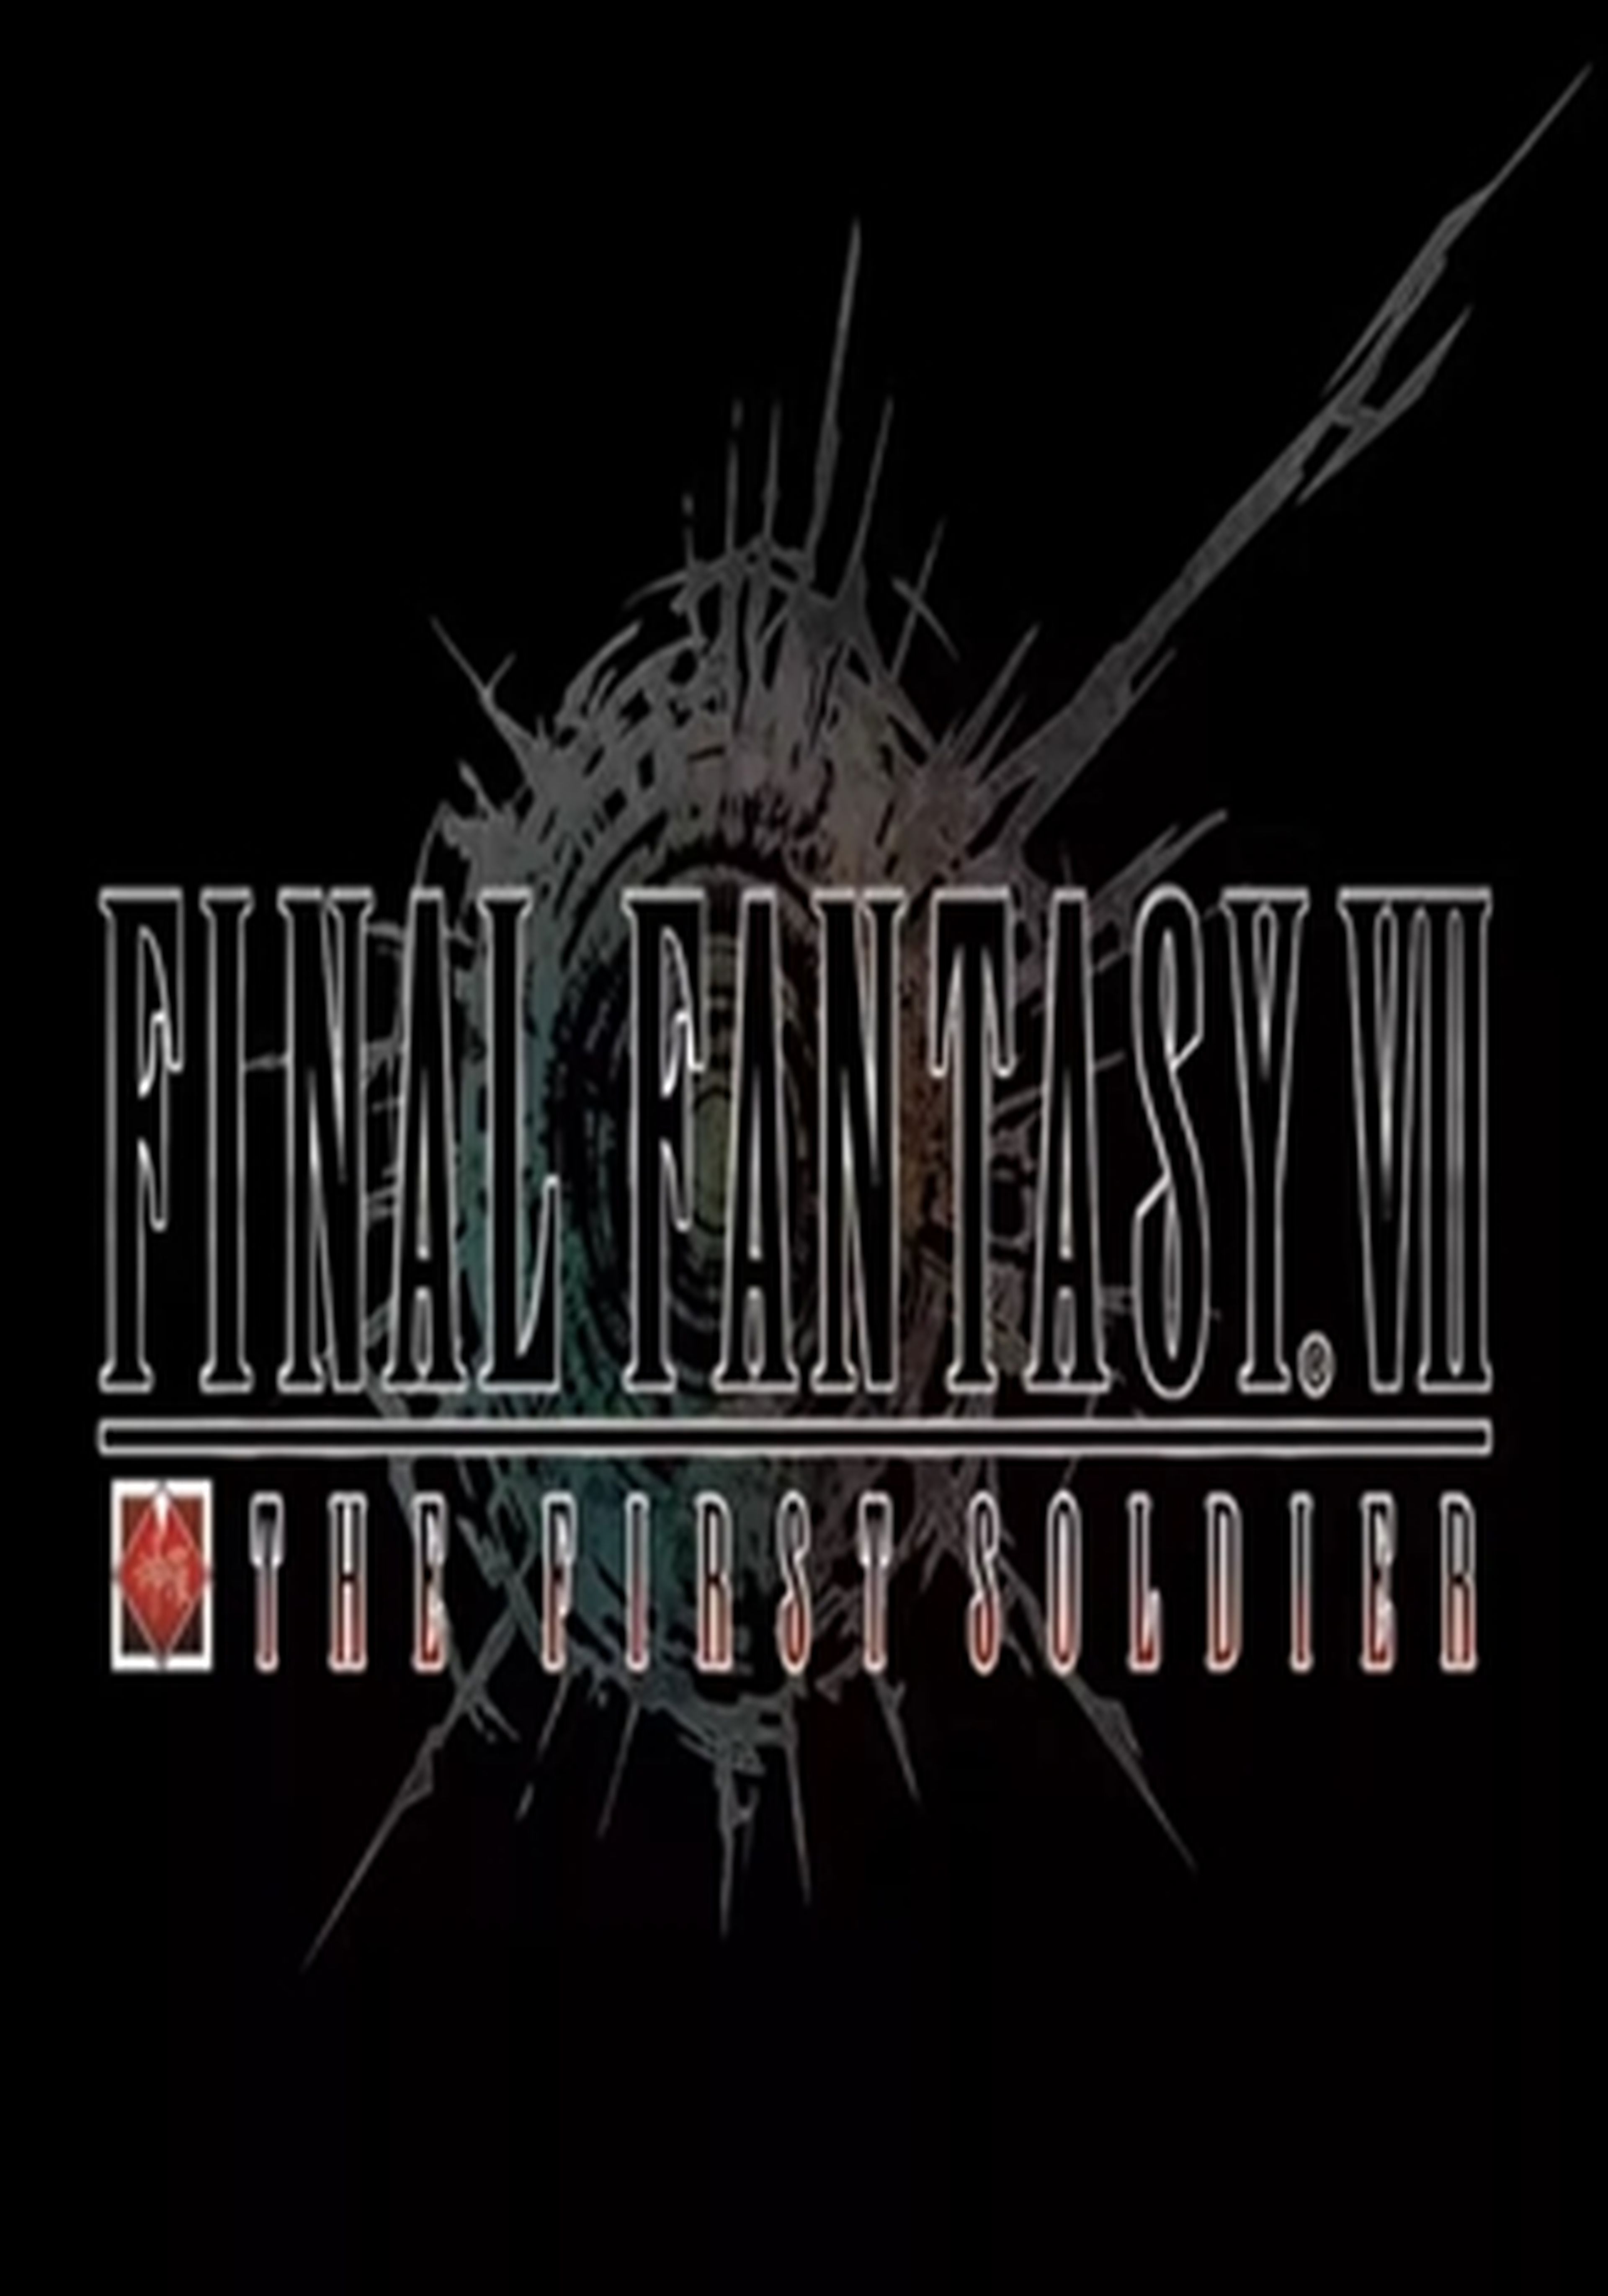 Final Fantasy VII The First Soldier cartel